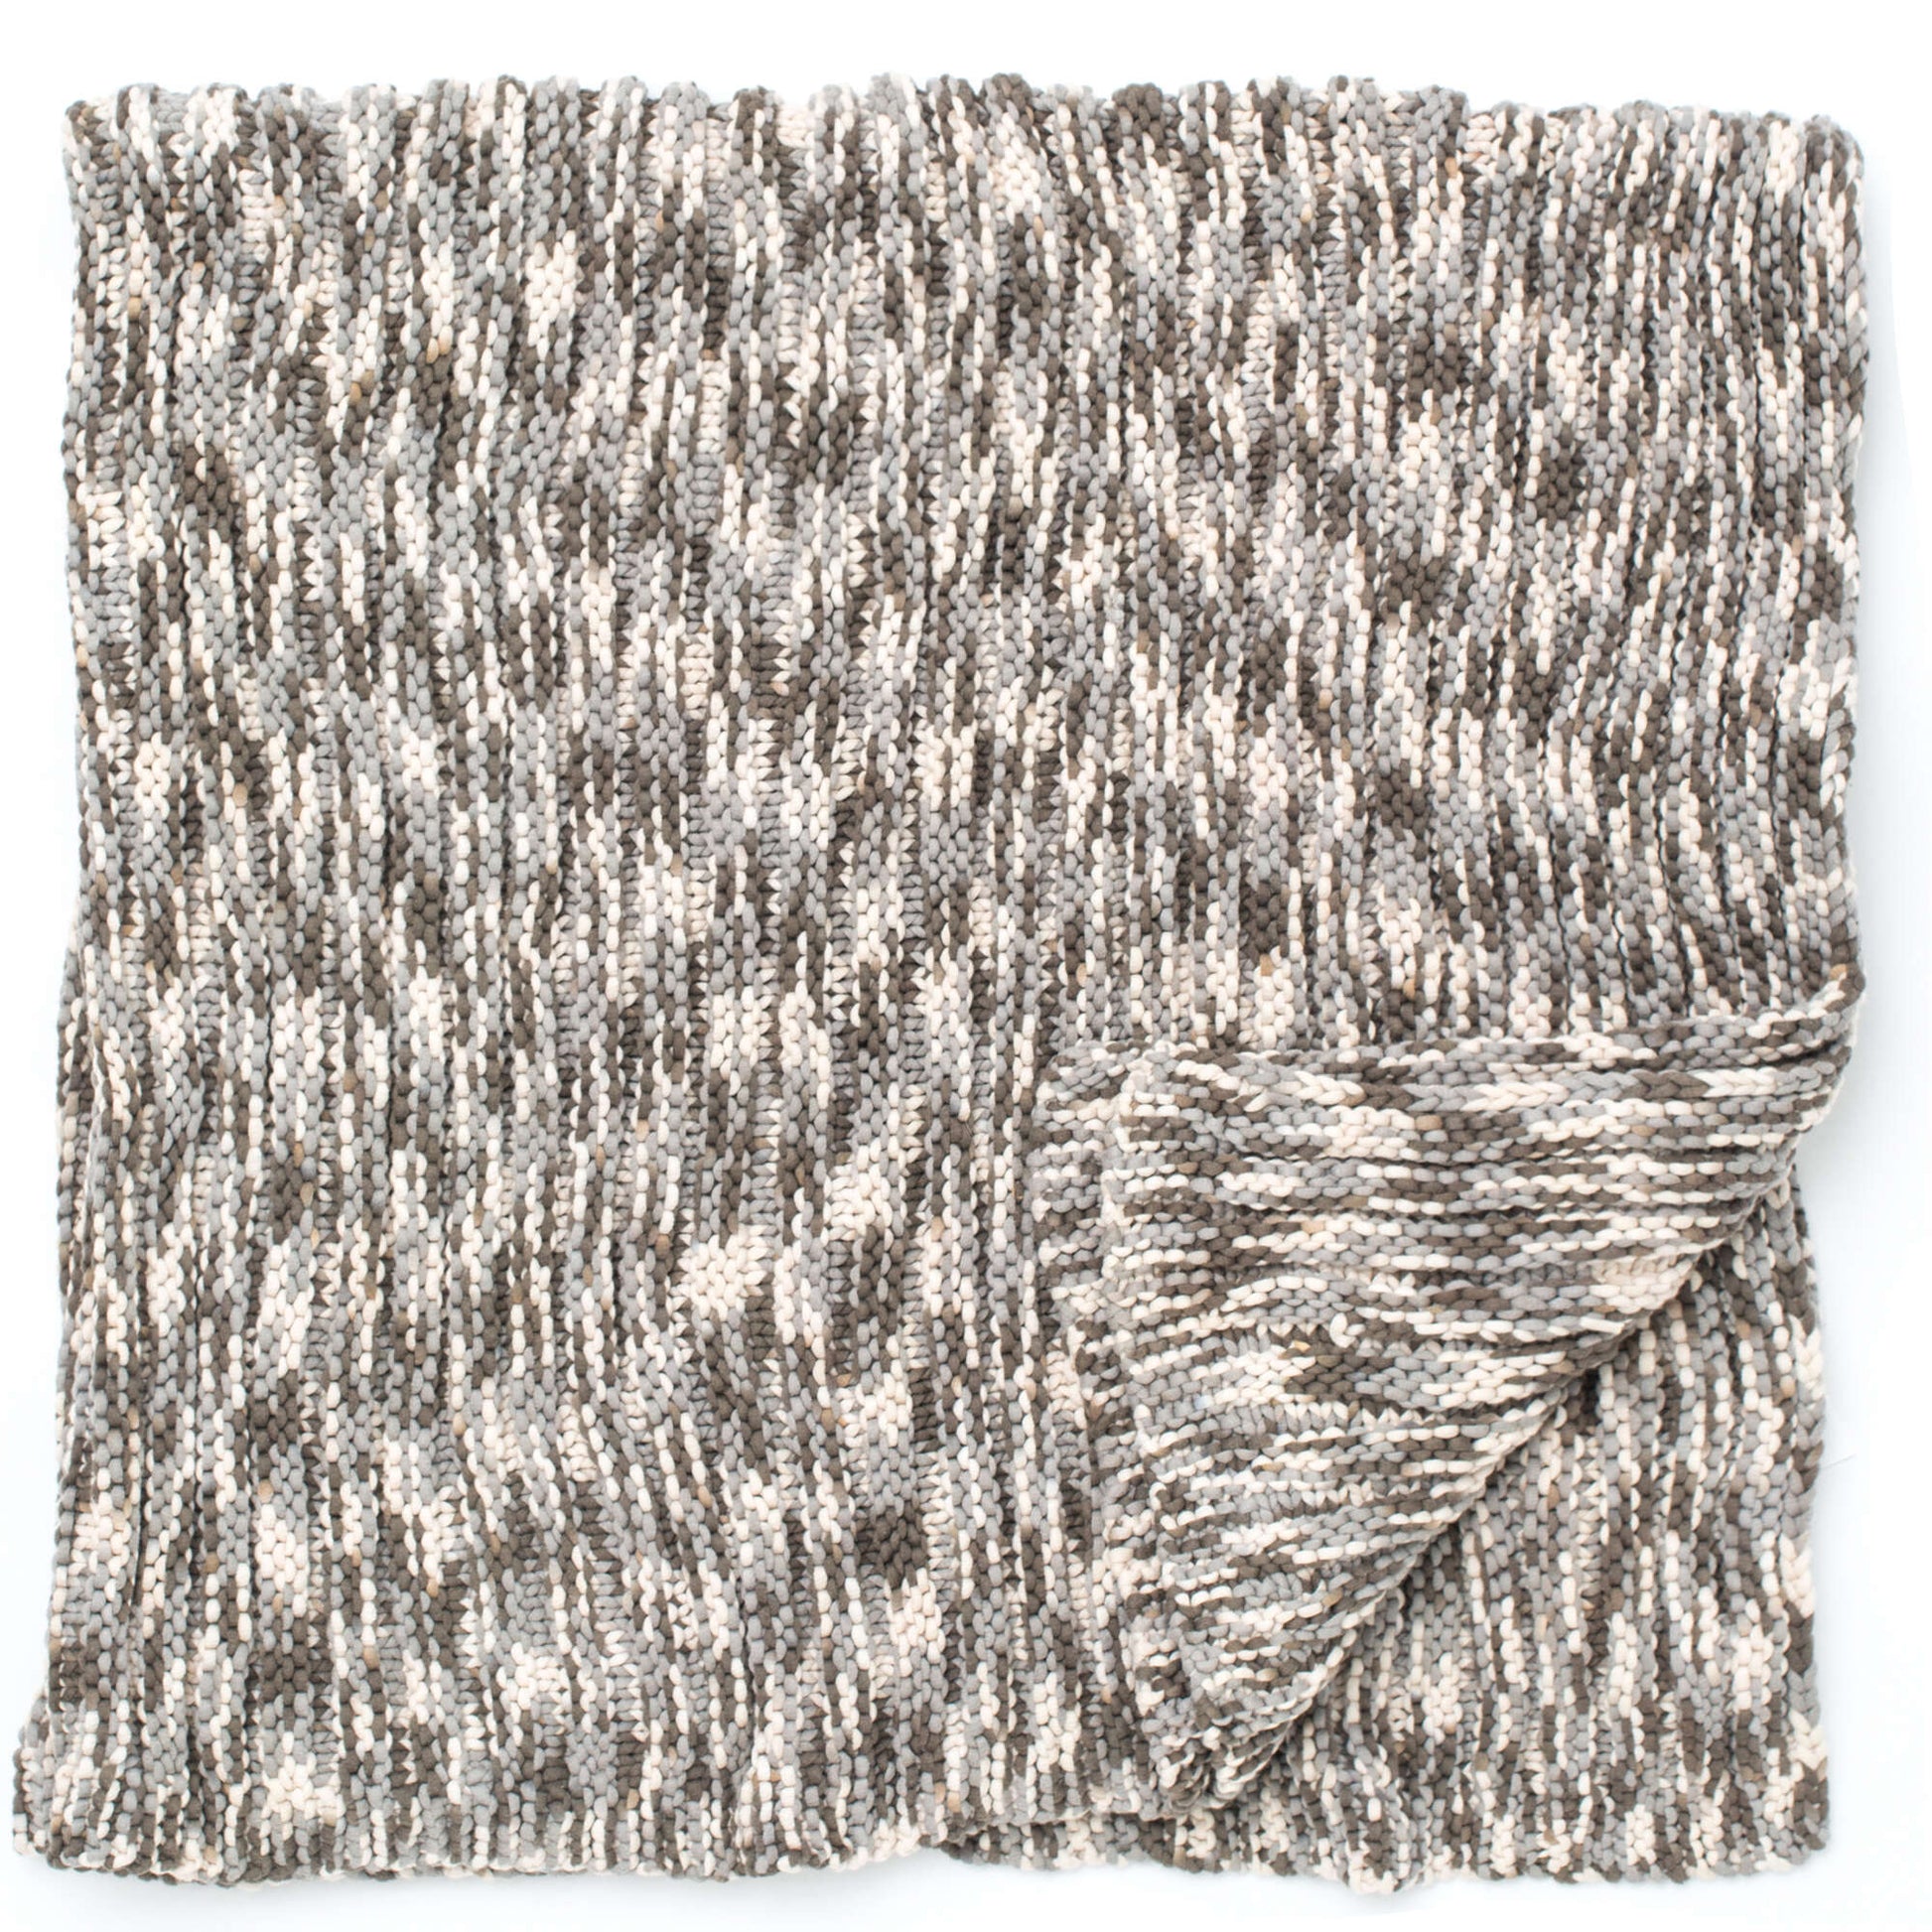 Free Bernat Ridges Knit Blanket Pattern